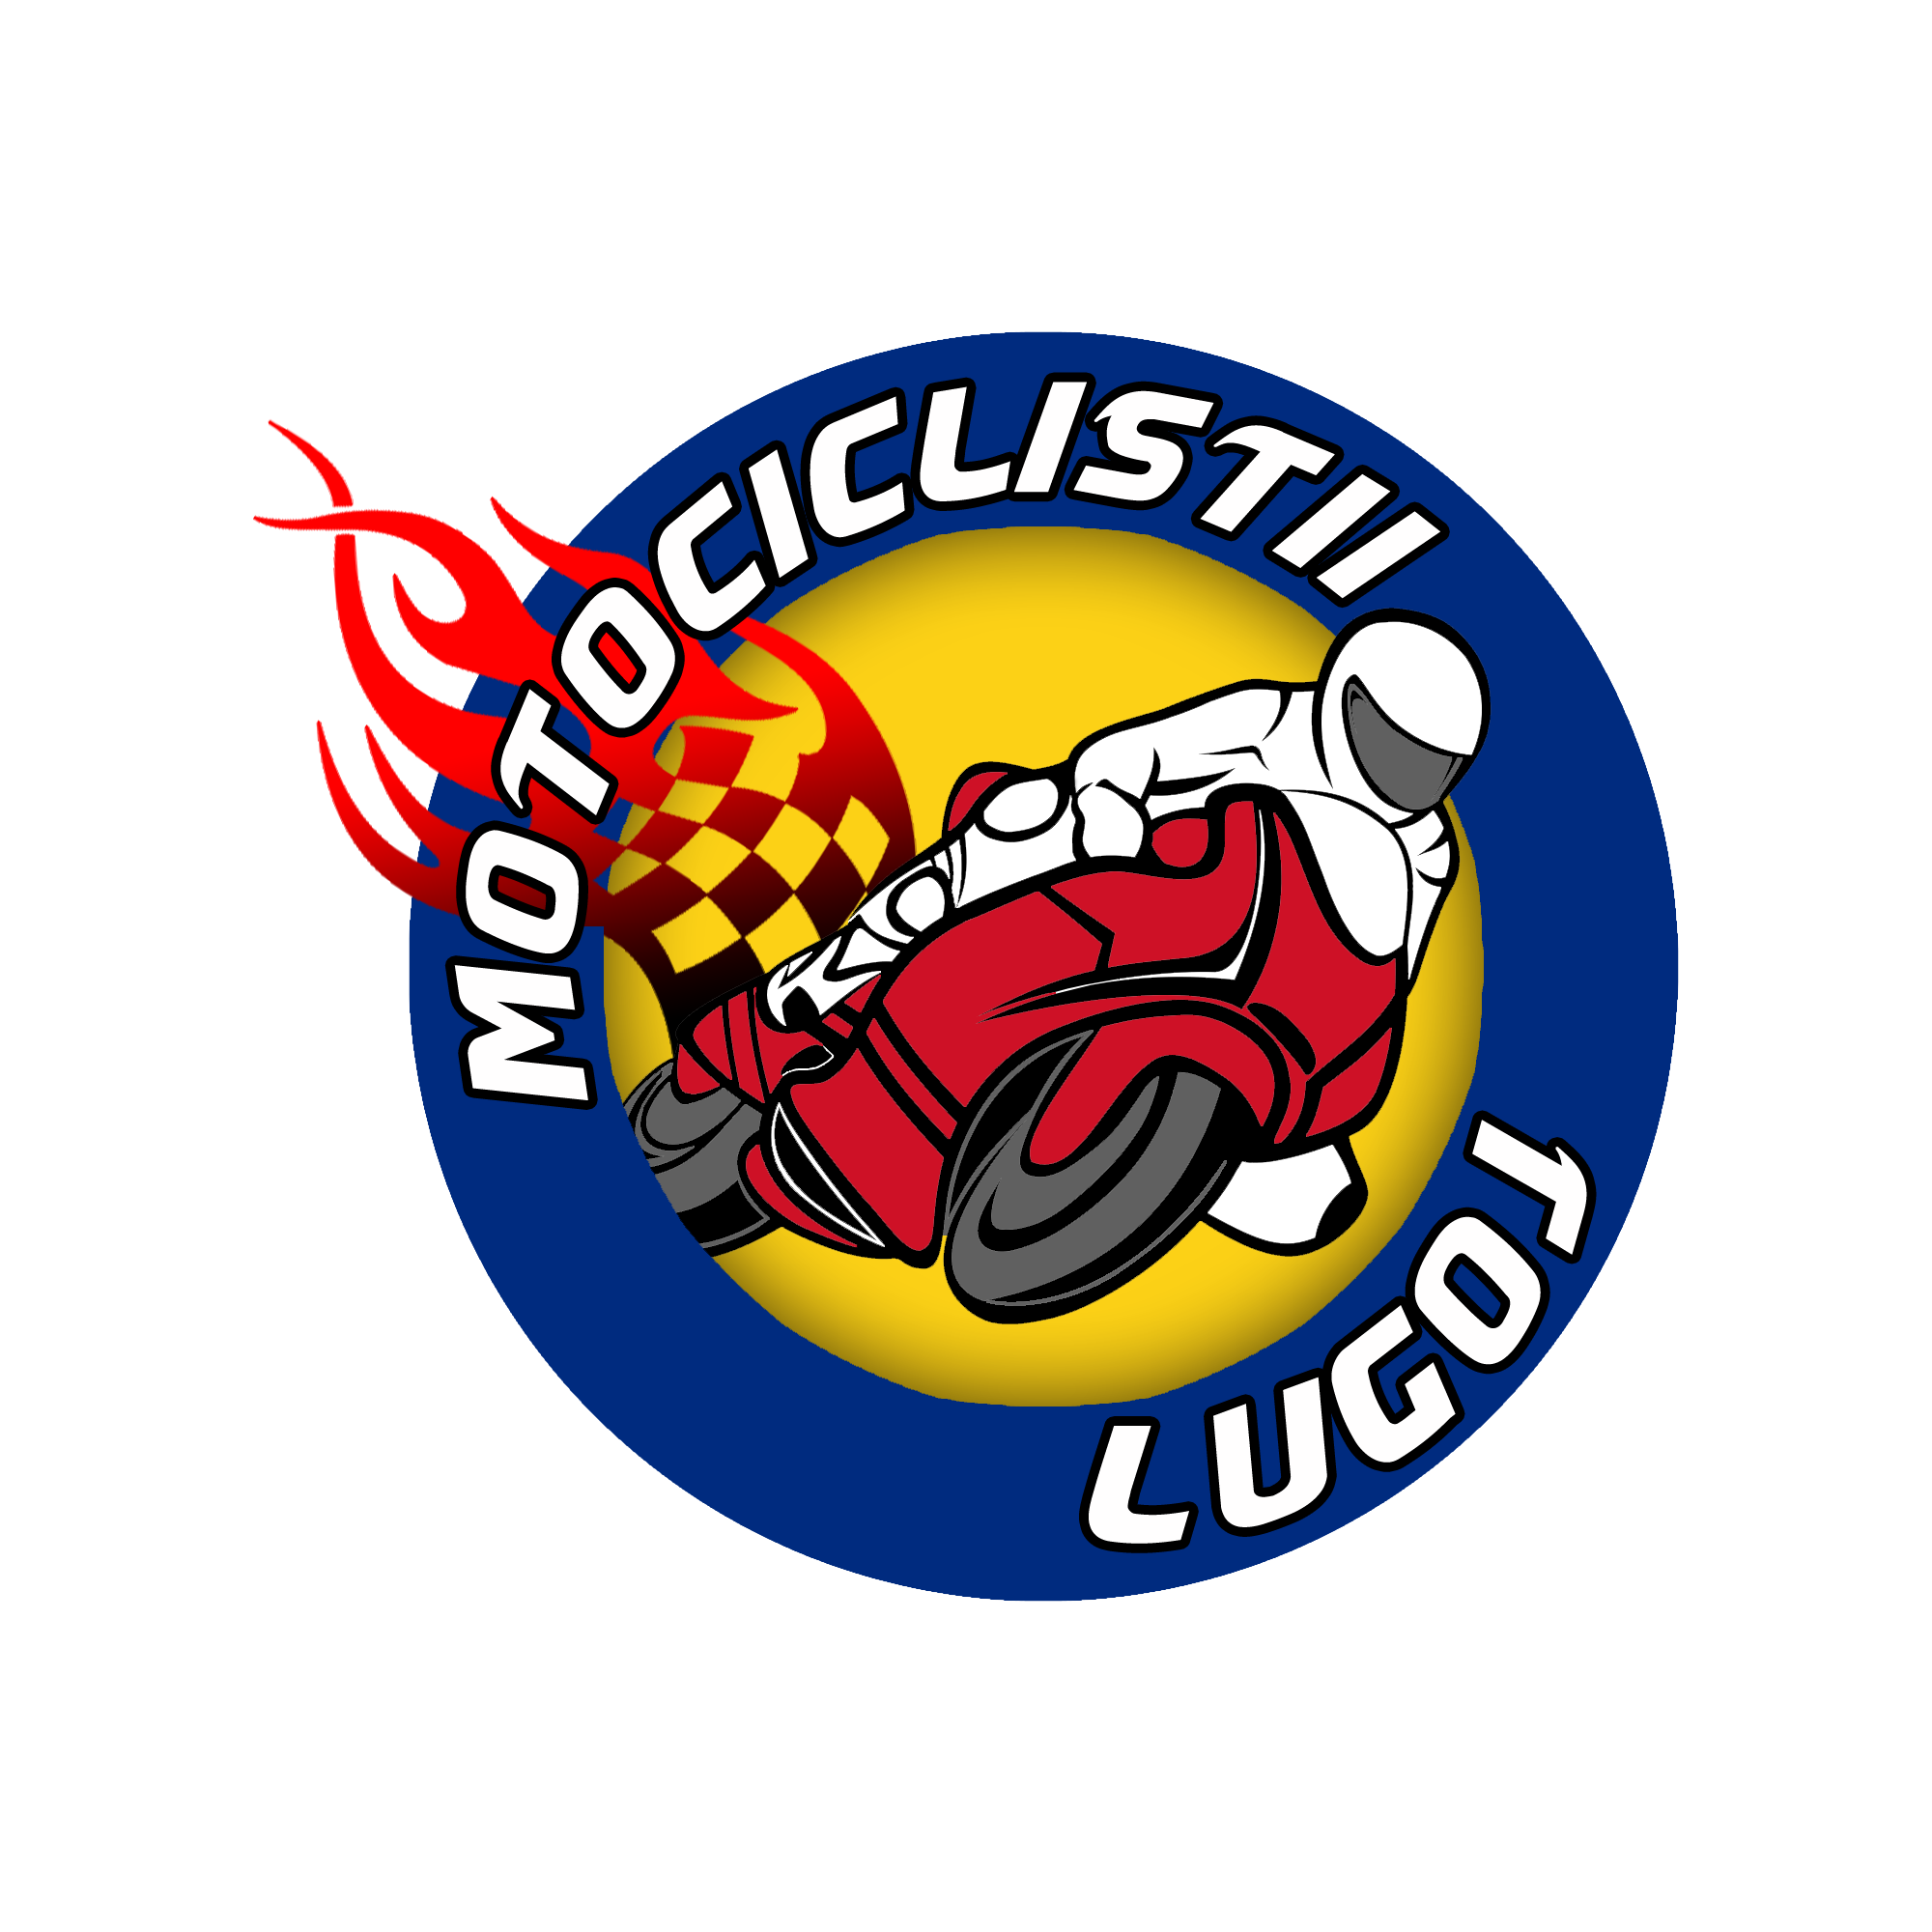 Motocicliştii Lugoj logo